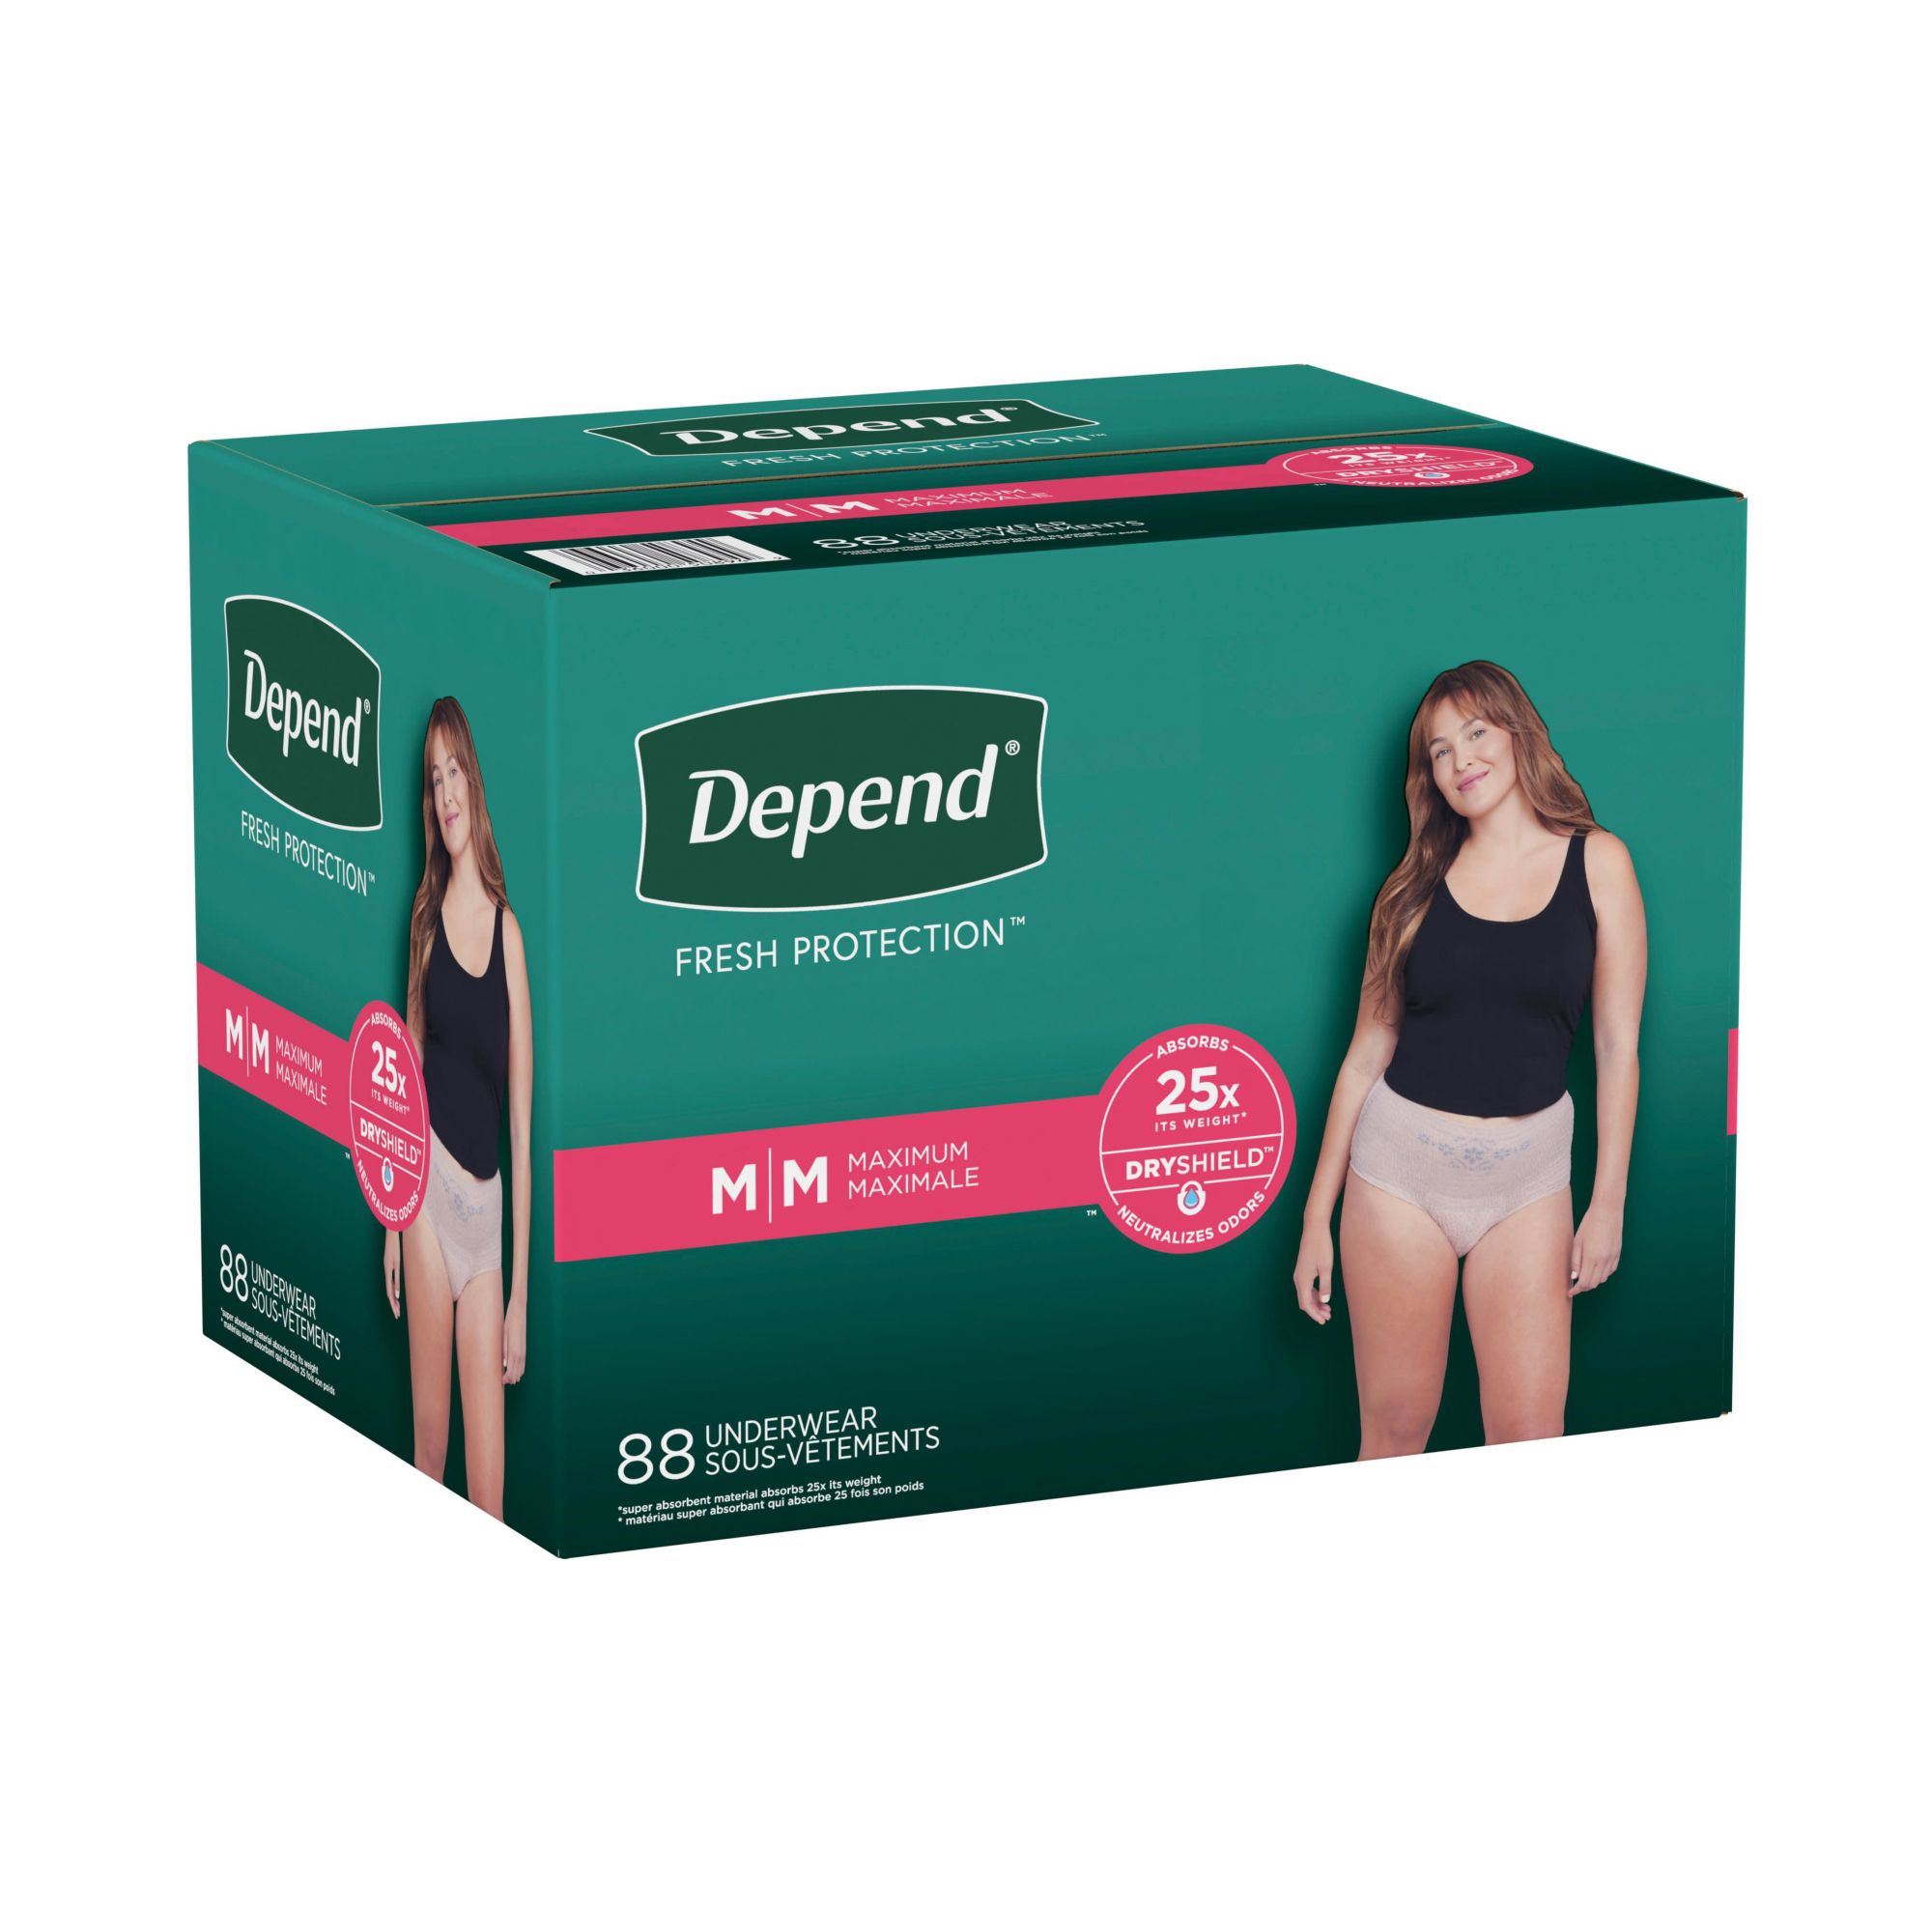 Protective underwear for women, large, 88 piece pack- Kirkland Signature